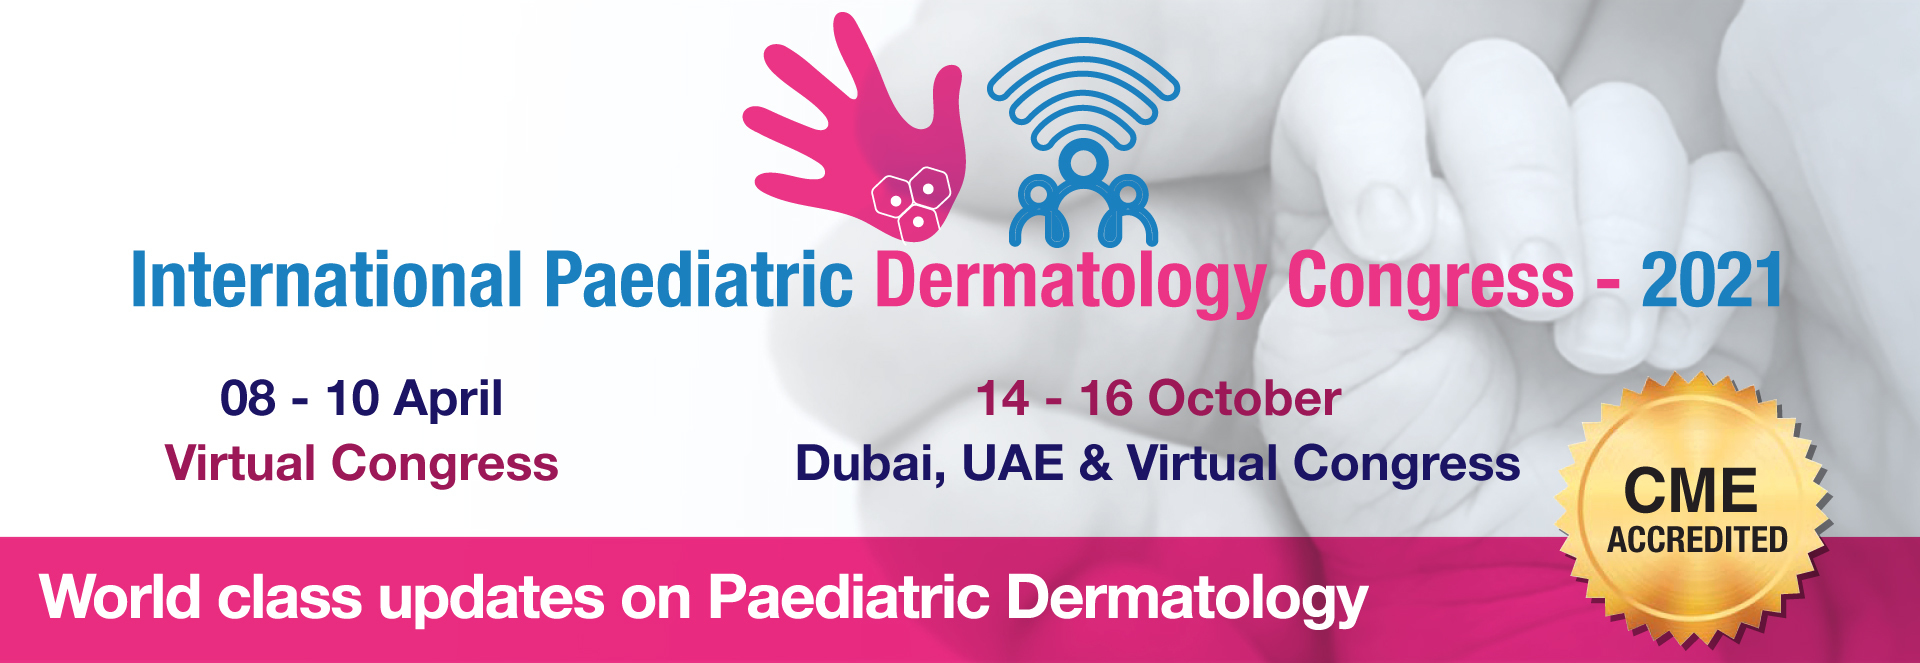 5th Annual International Paediatric Dermatology Congress, Online, United Arab Emirates